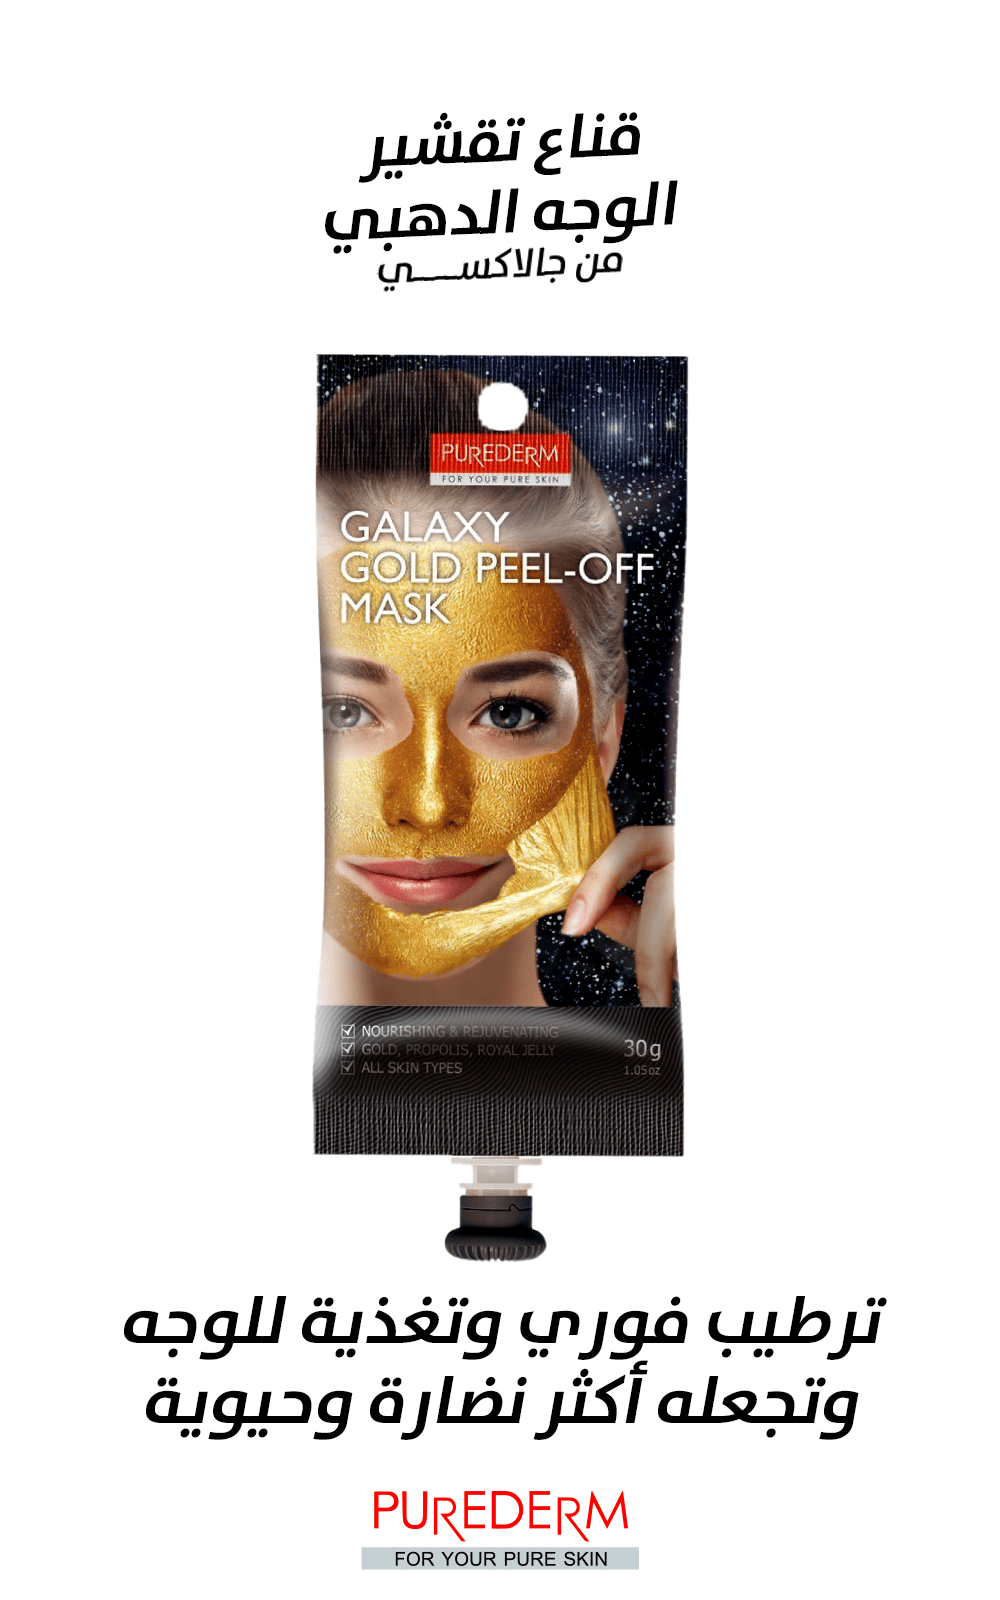 Purederm galaxy gold peel-off mask